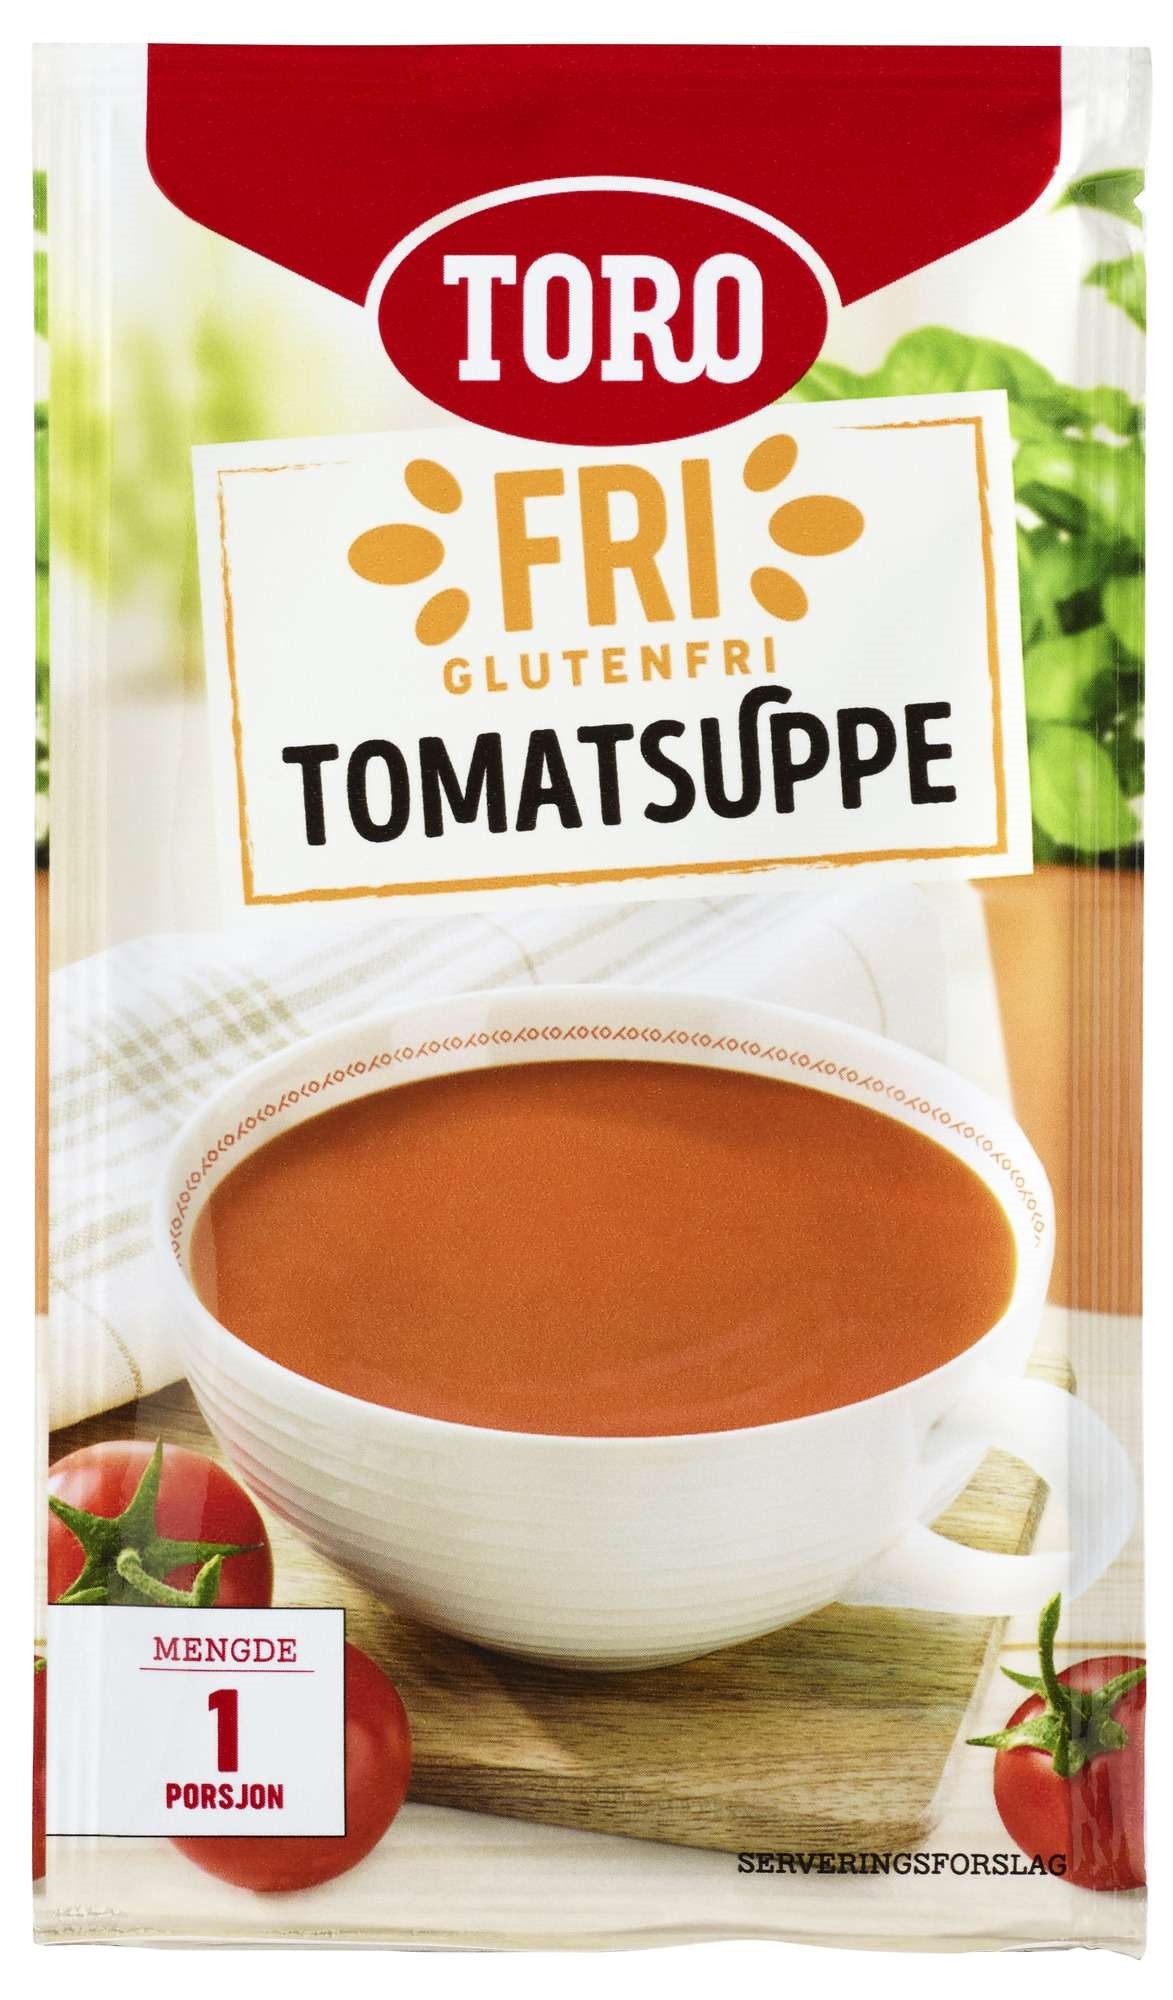 Toro fri tomatsuppe porsjon glutenfri  22g